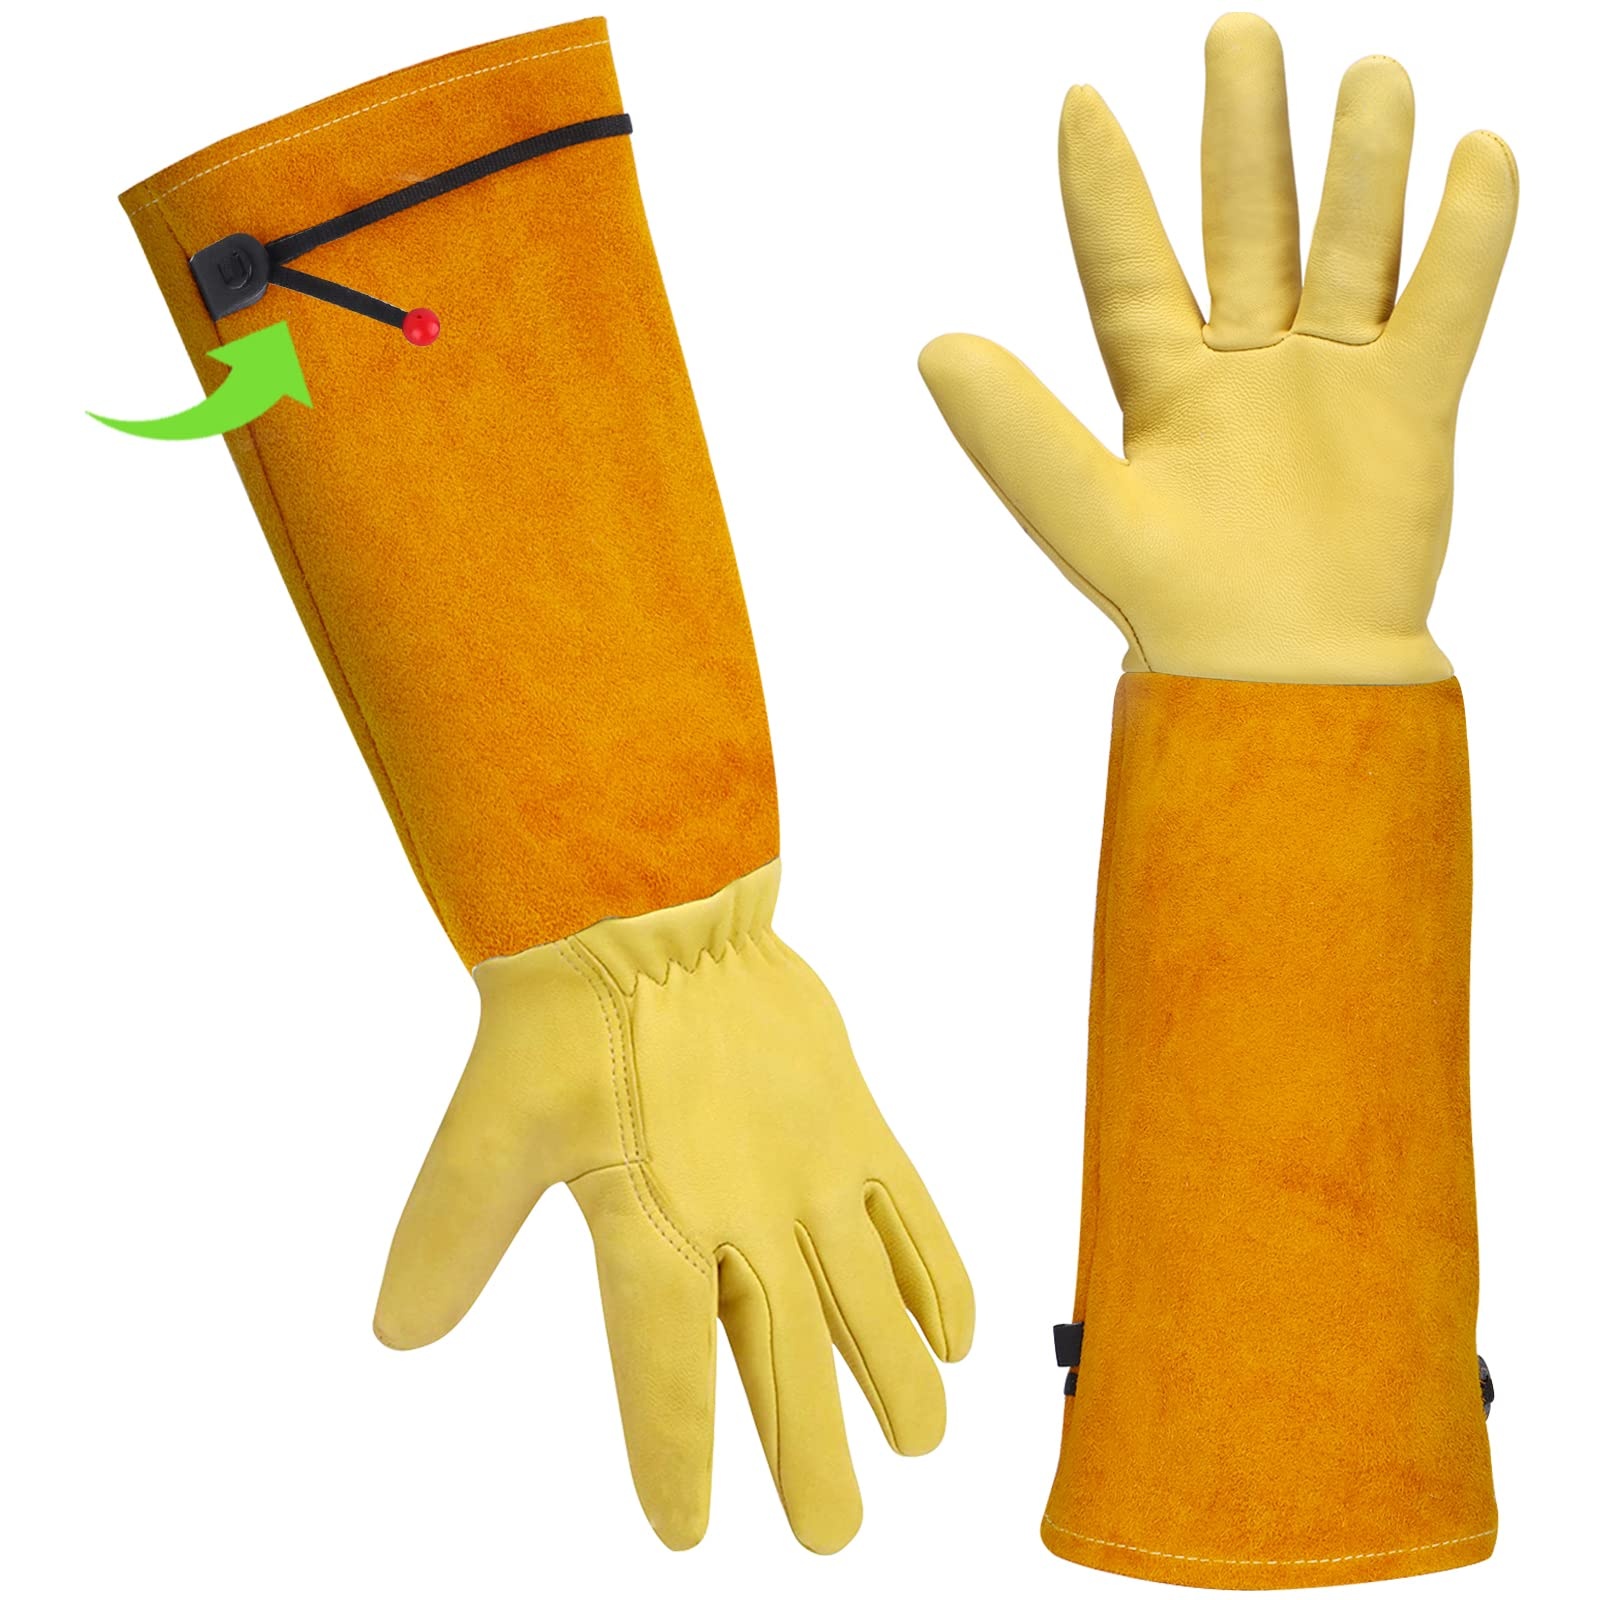 12 Leder Handschuhe Arbeitshandschuhe Profi Rindspalt Handschuhe mit Canvas Stulpe EN388 Robuster Handschuh Gr 10,5 Menge wählbar